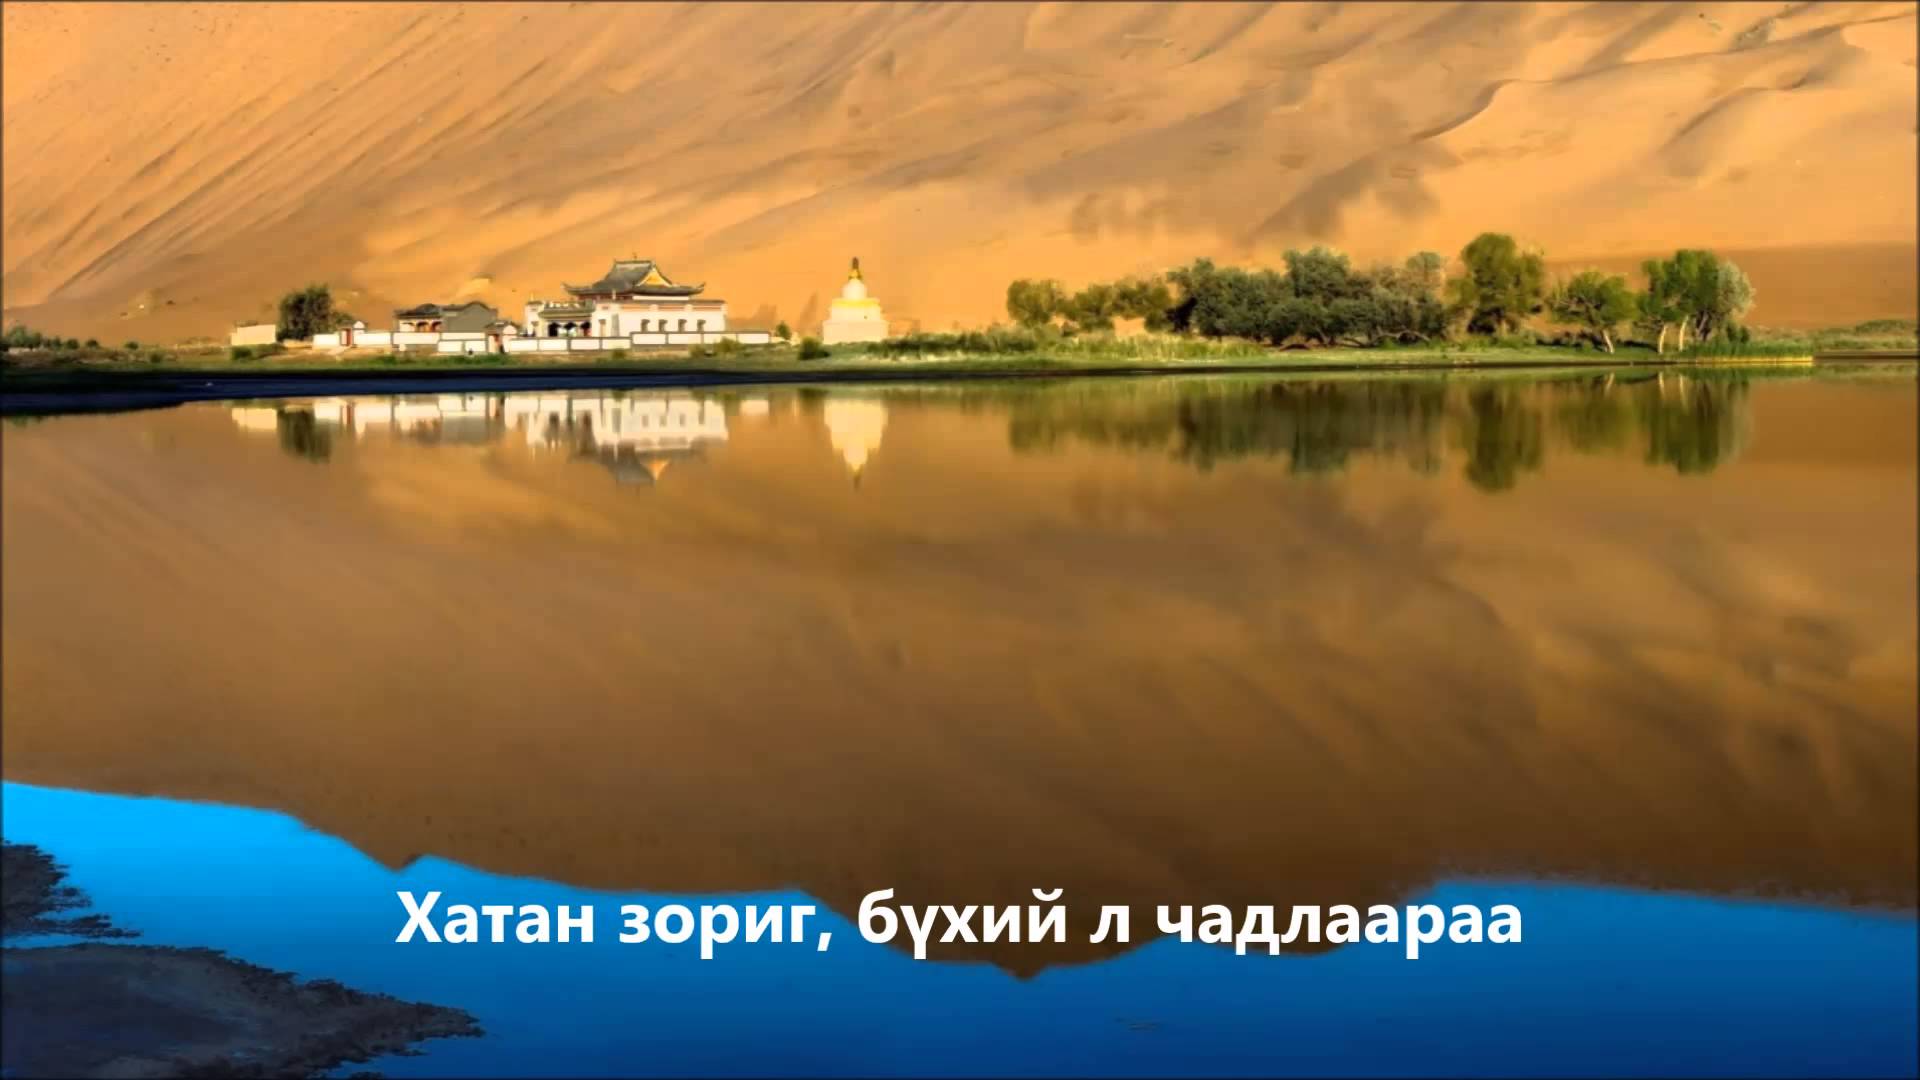 Mongolia (Mongol Uls)